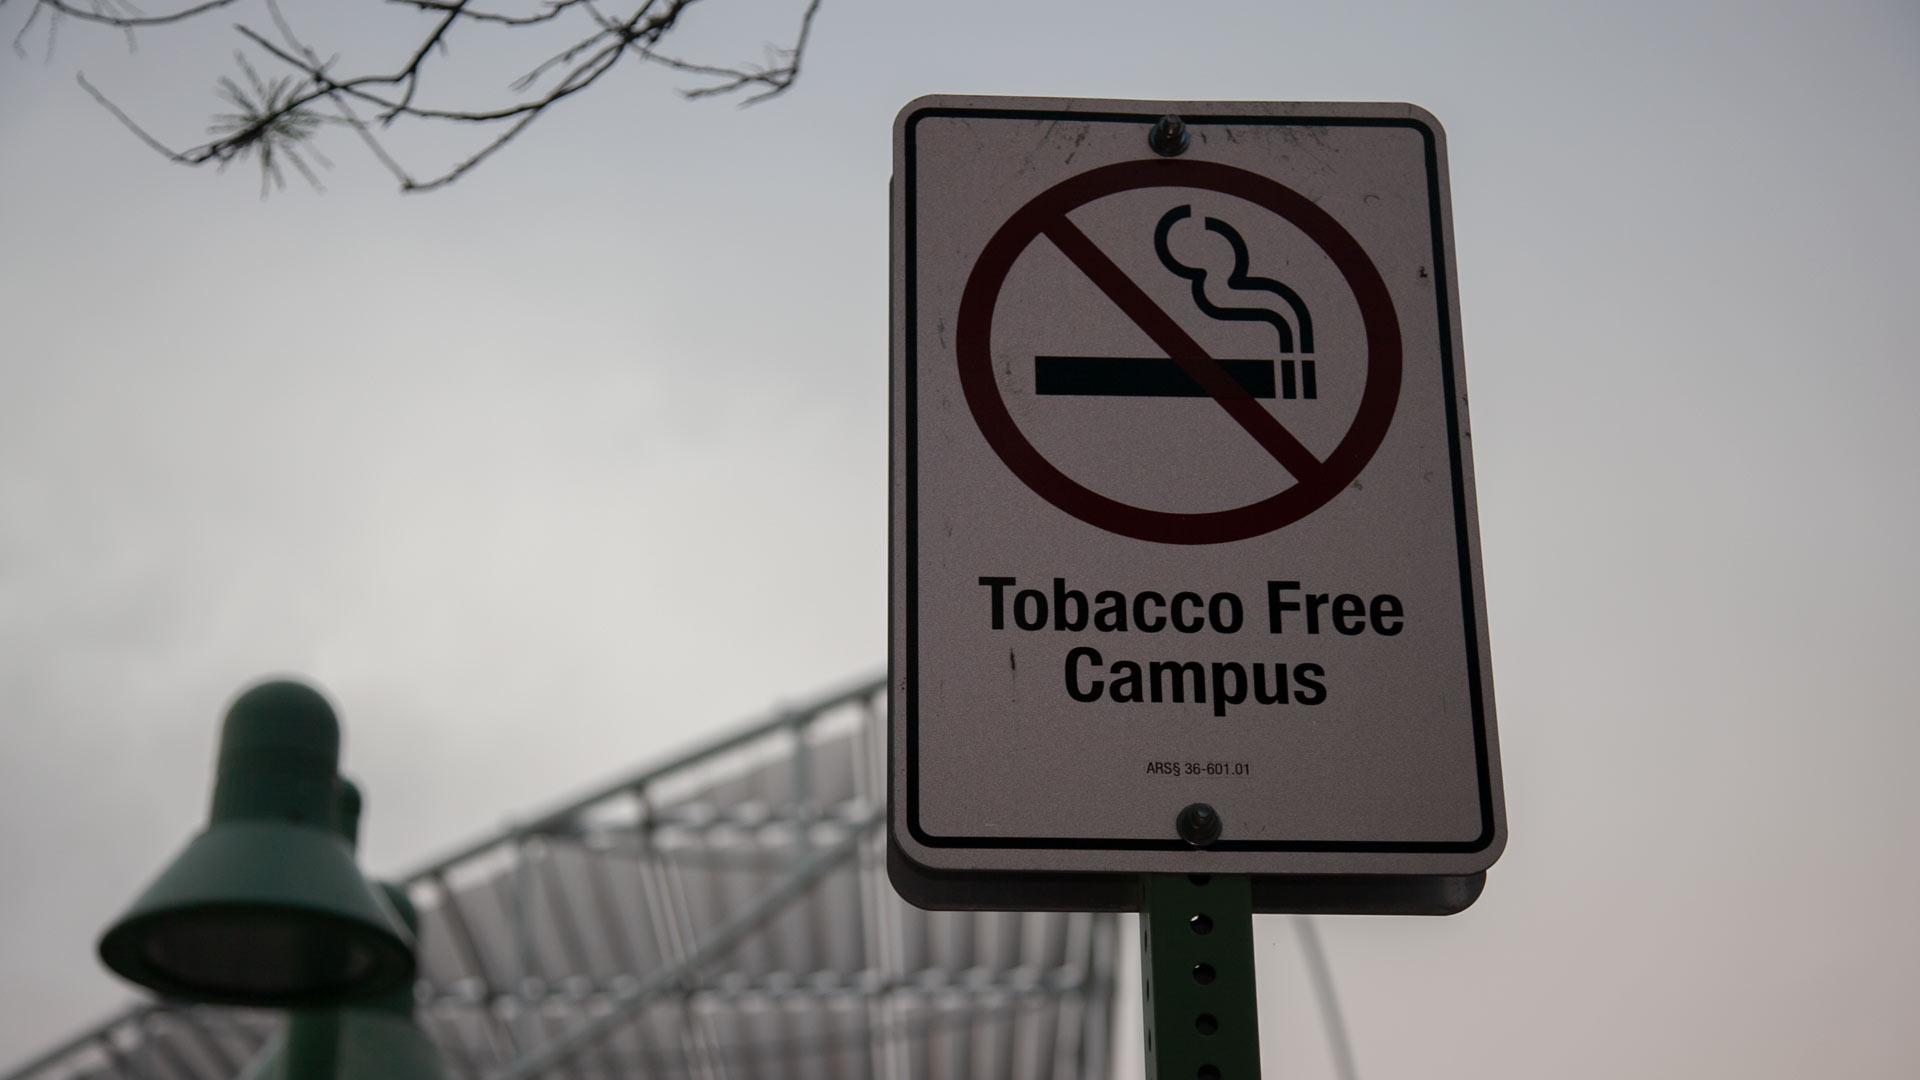 The University of Arizona has banned smoking on campus.